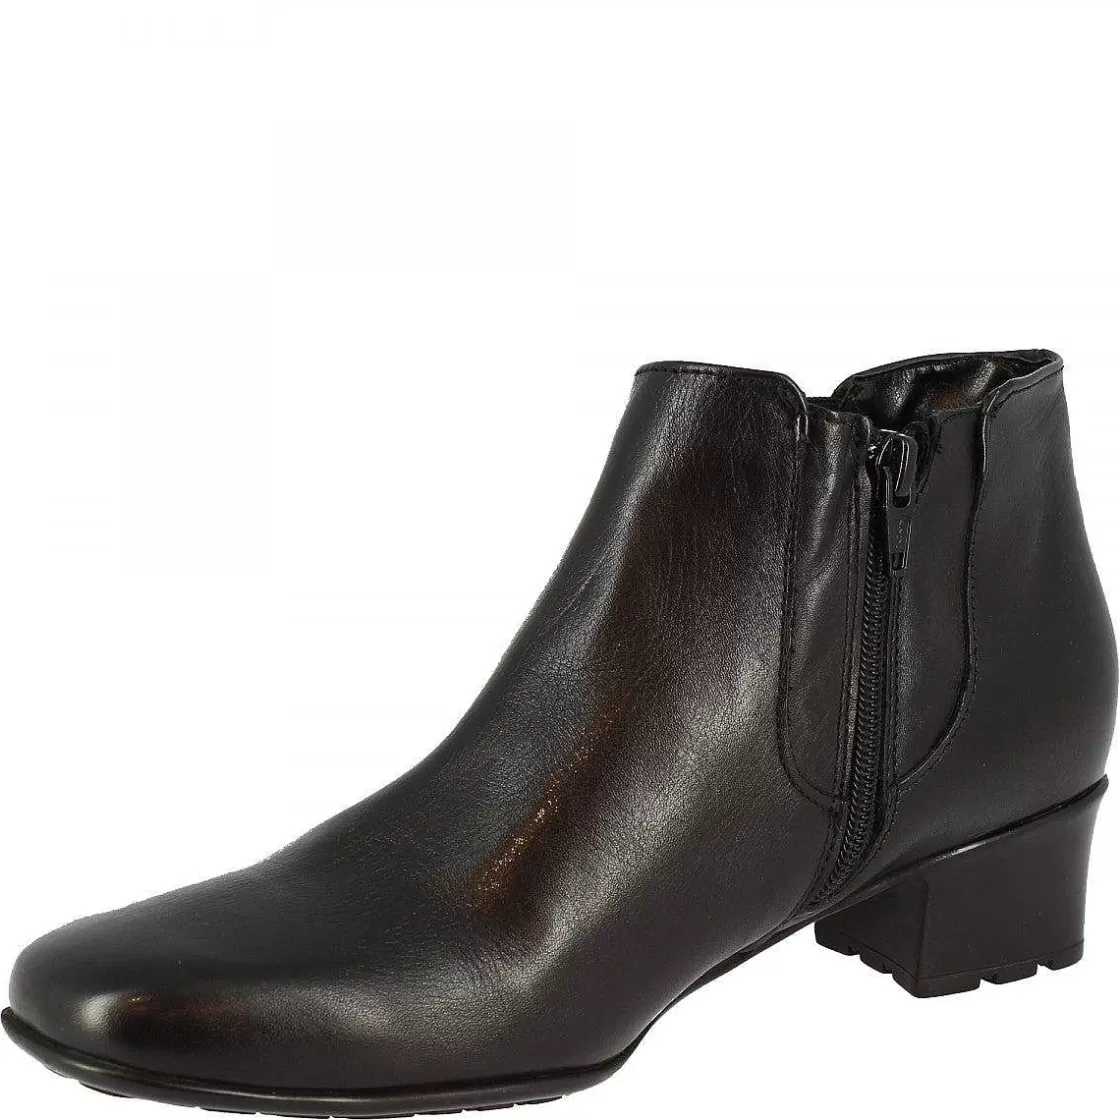 Leonardo Women'S Handmade Square Heels Ankle Boots In Black Calf Leather With Zipper Best Sale